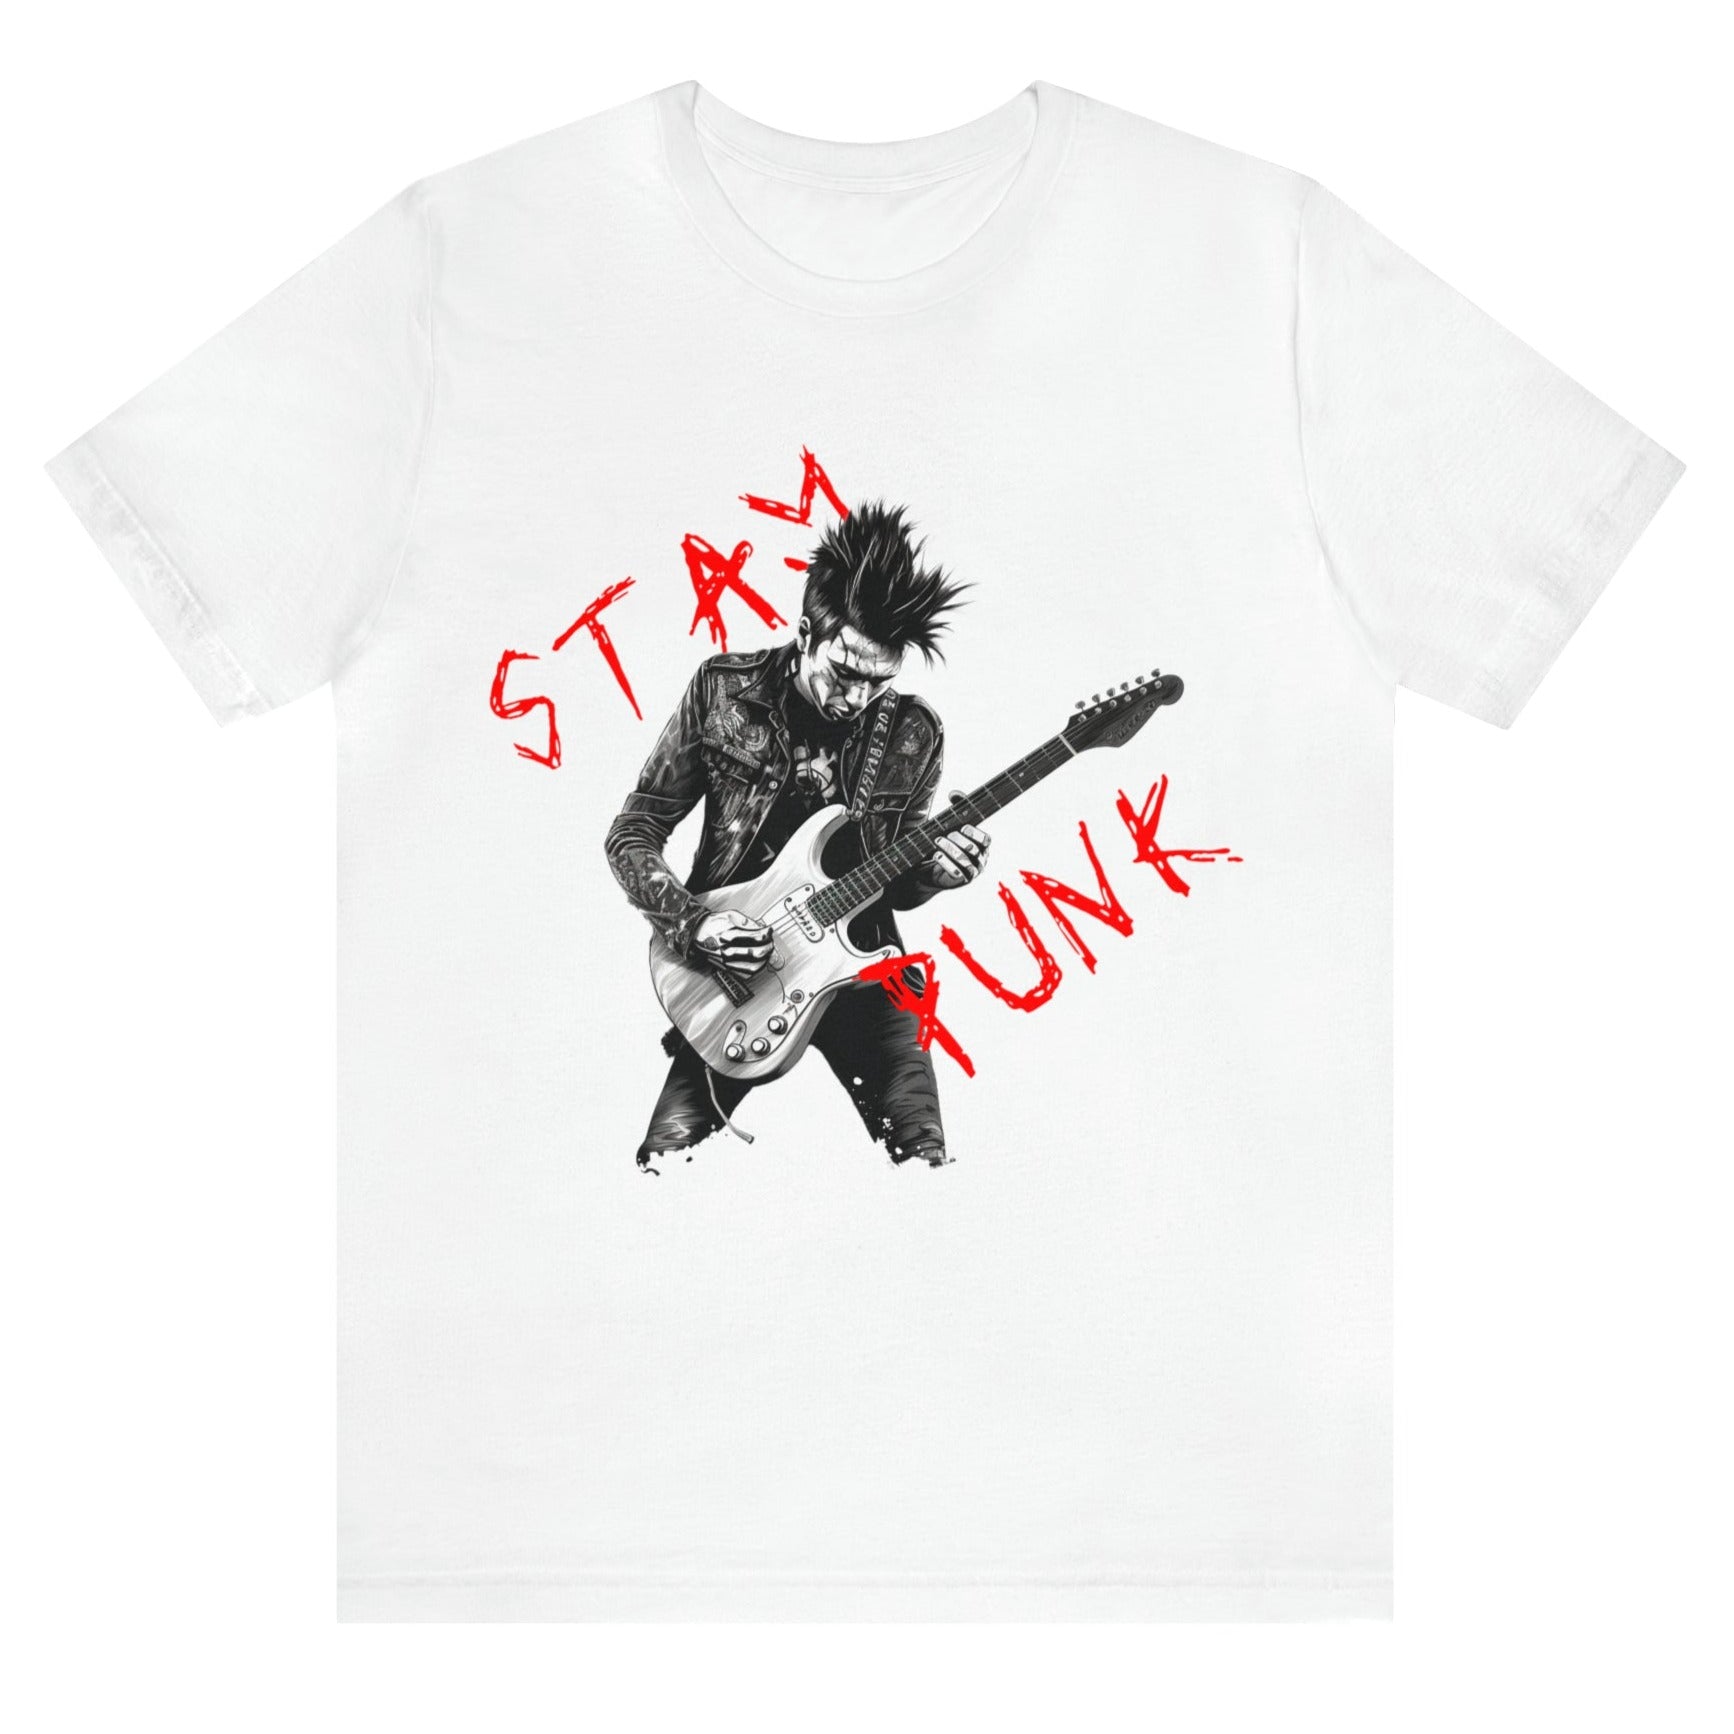 stay-punk-with-punk-rocker-guitarist-white-t-shirt